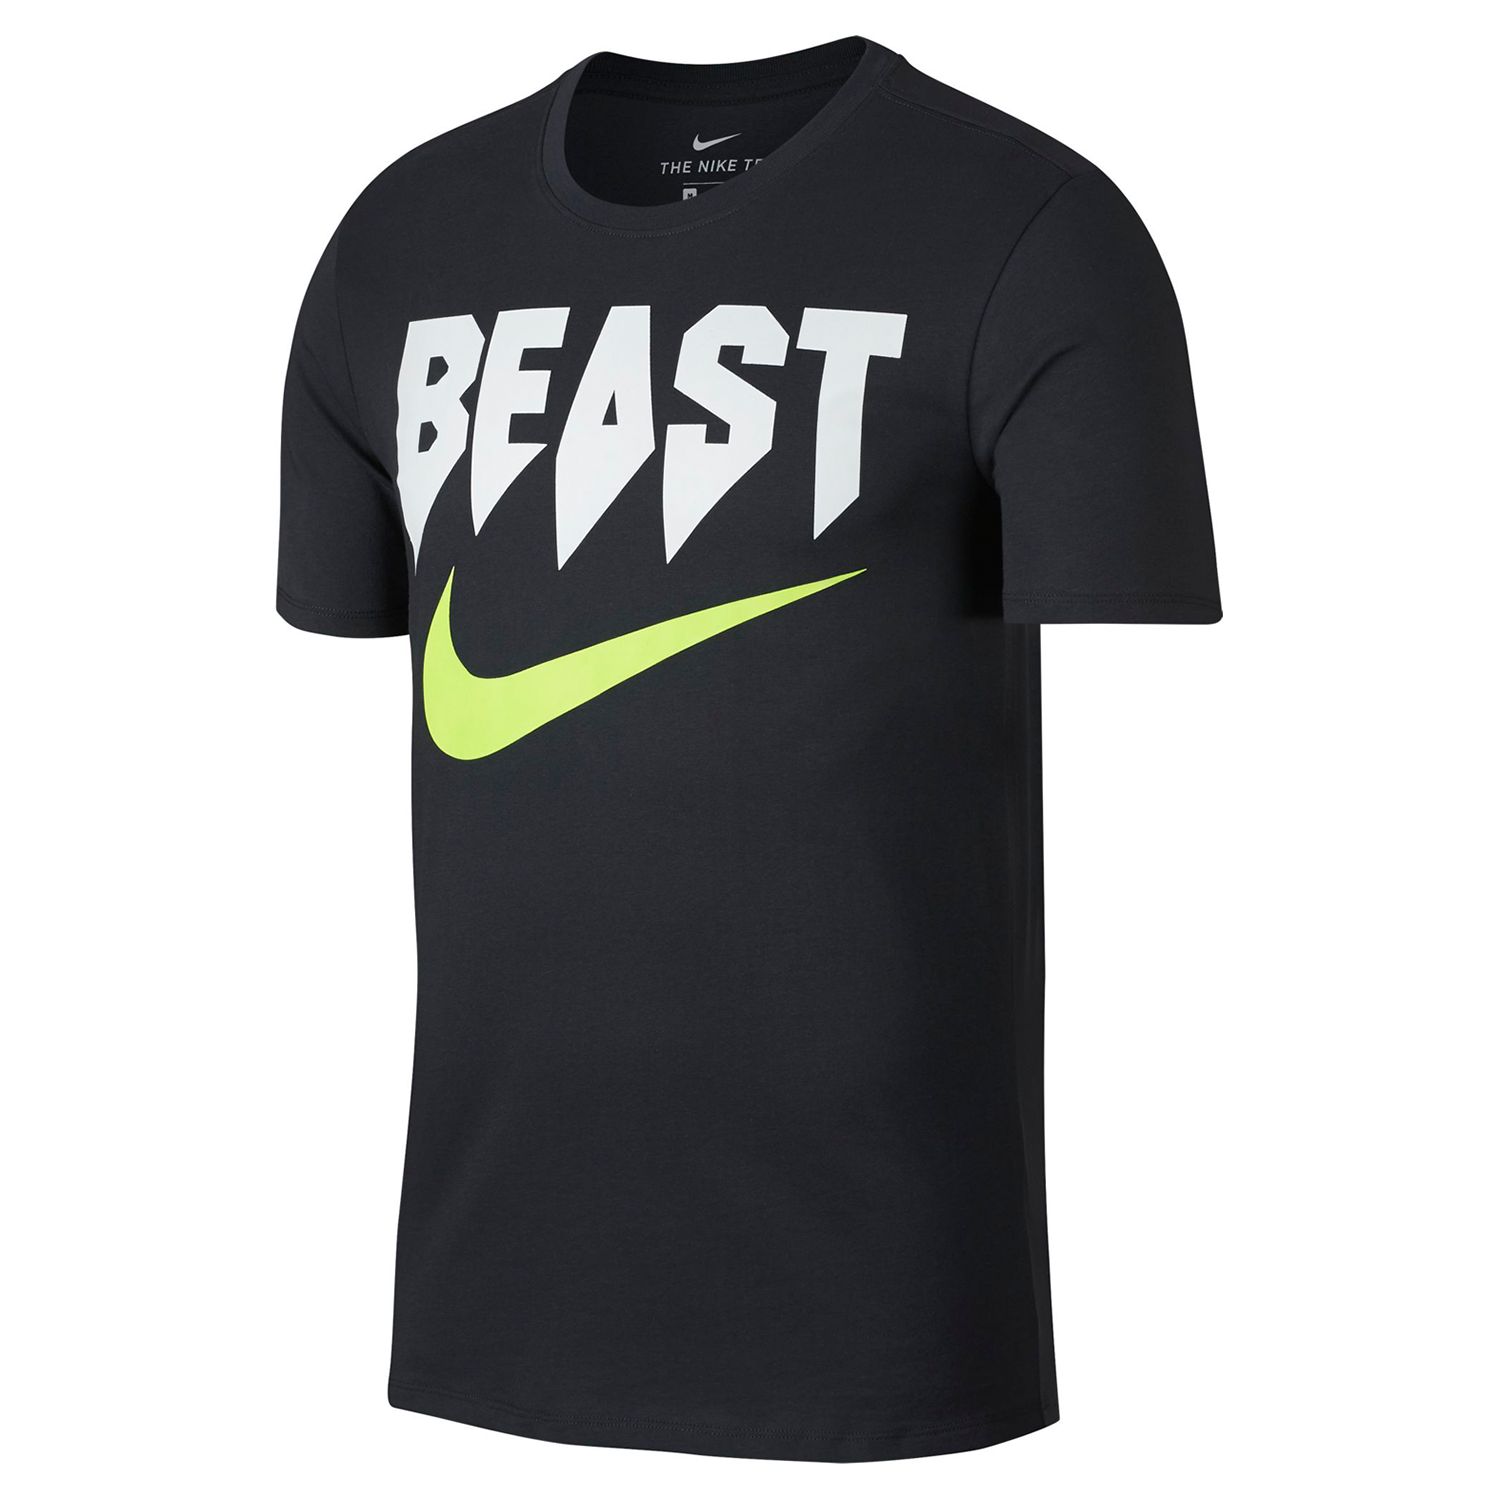 Men's Nike Beast Tee